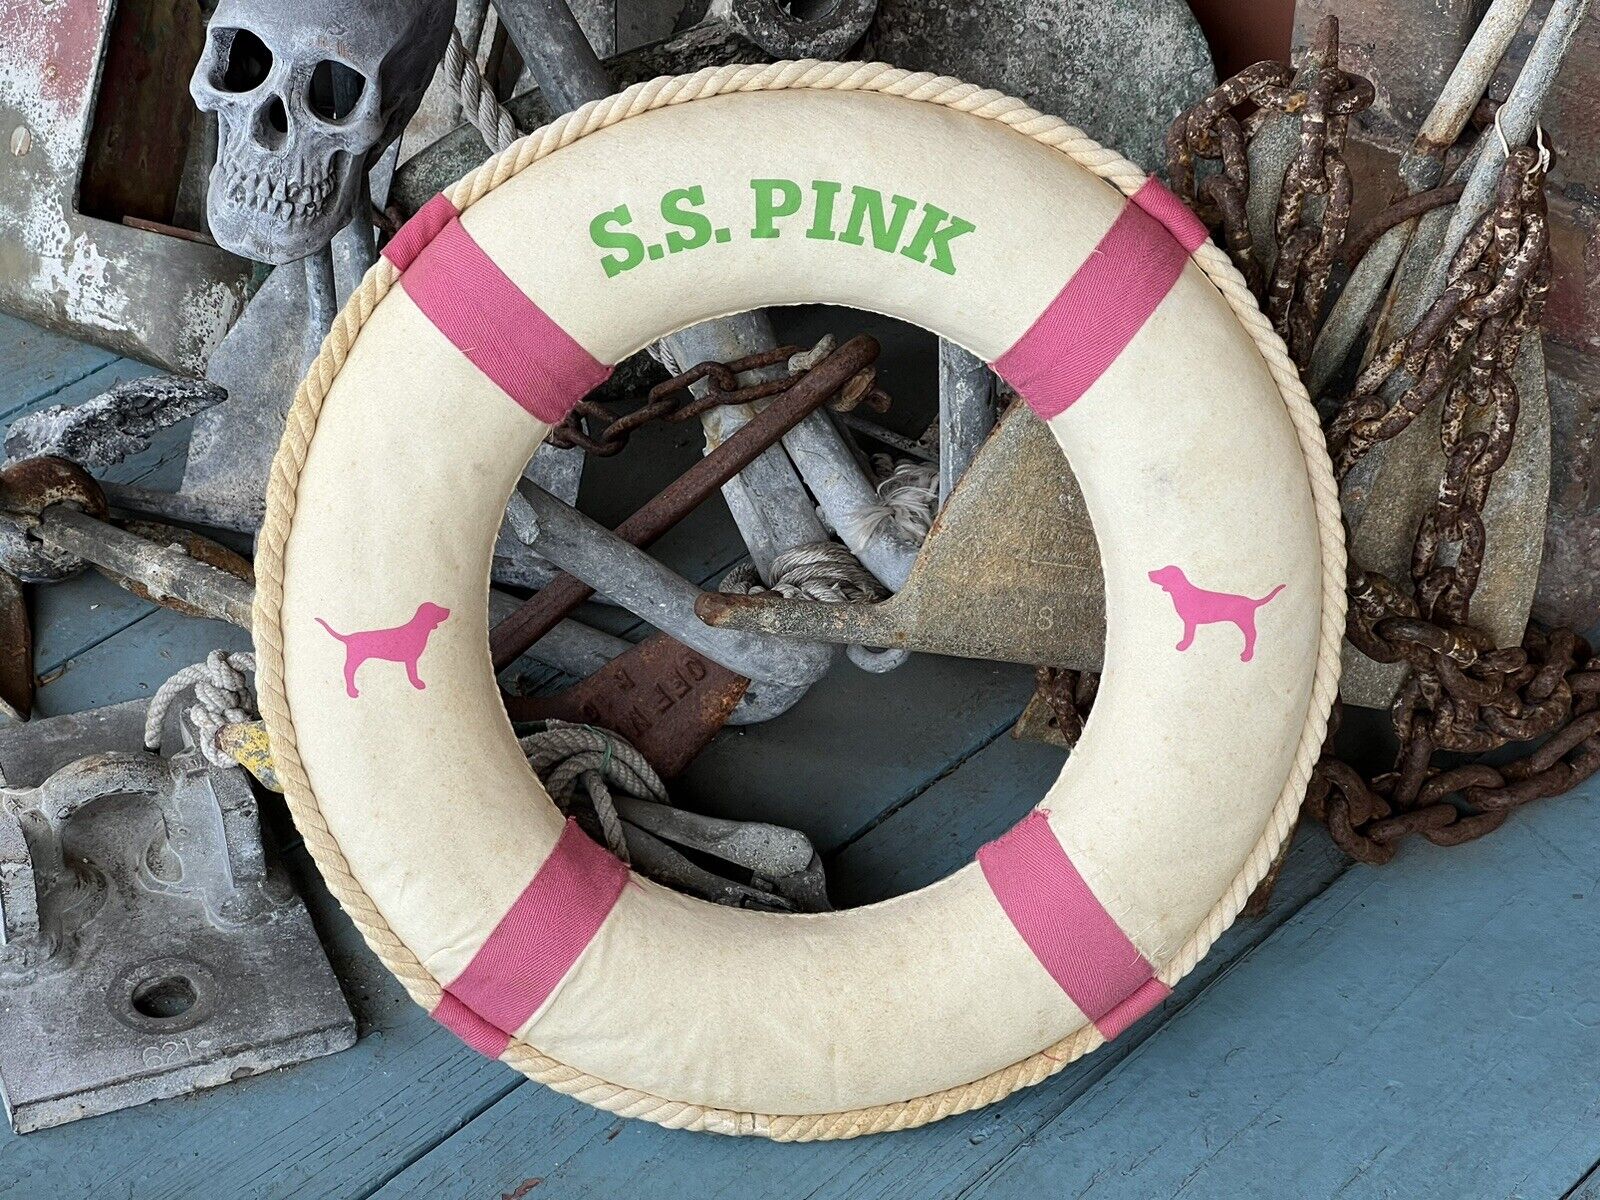 Victoria’s Secret PINK Vintage Life Ring Saver Buoy Display Collectible Prop 18